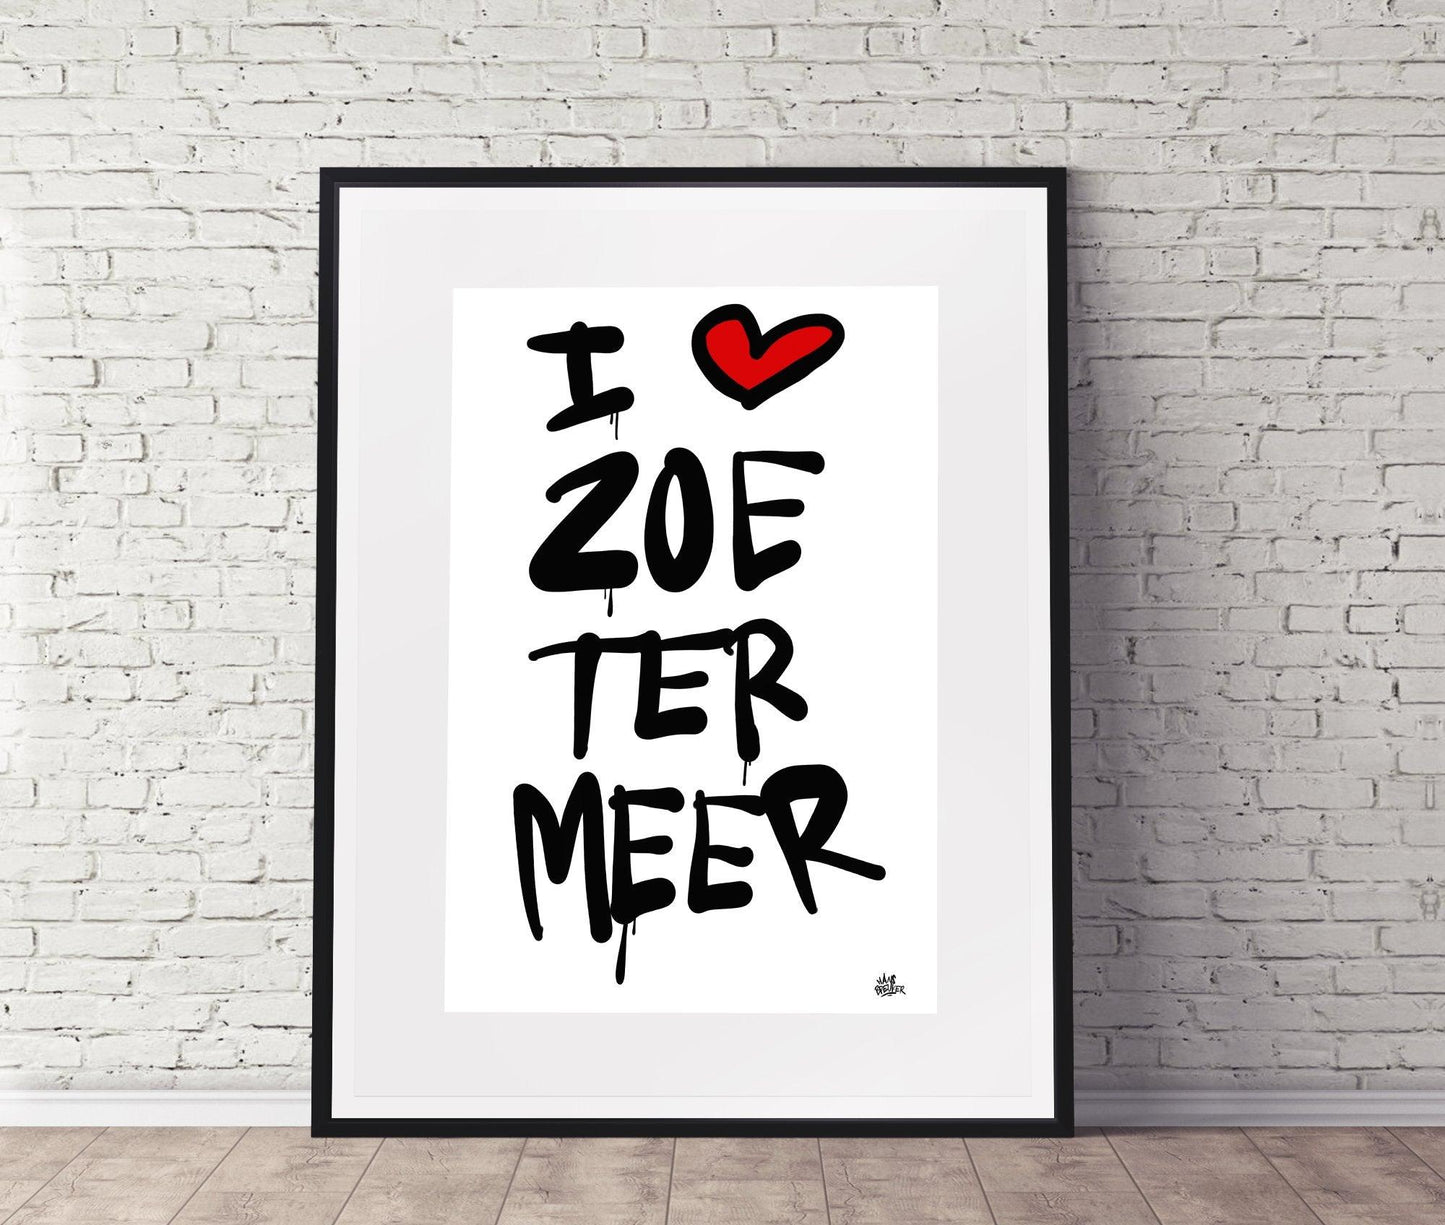 Poster Zoetermeer - Hans Breuker